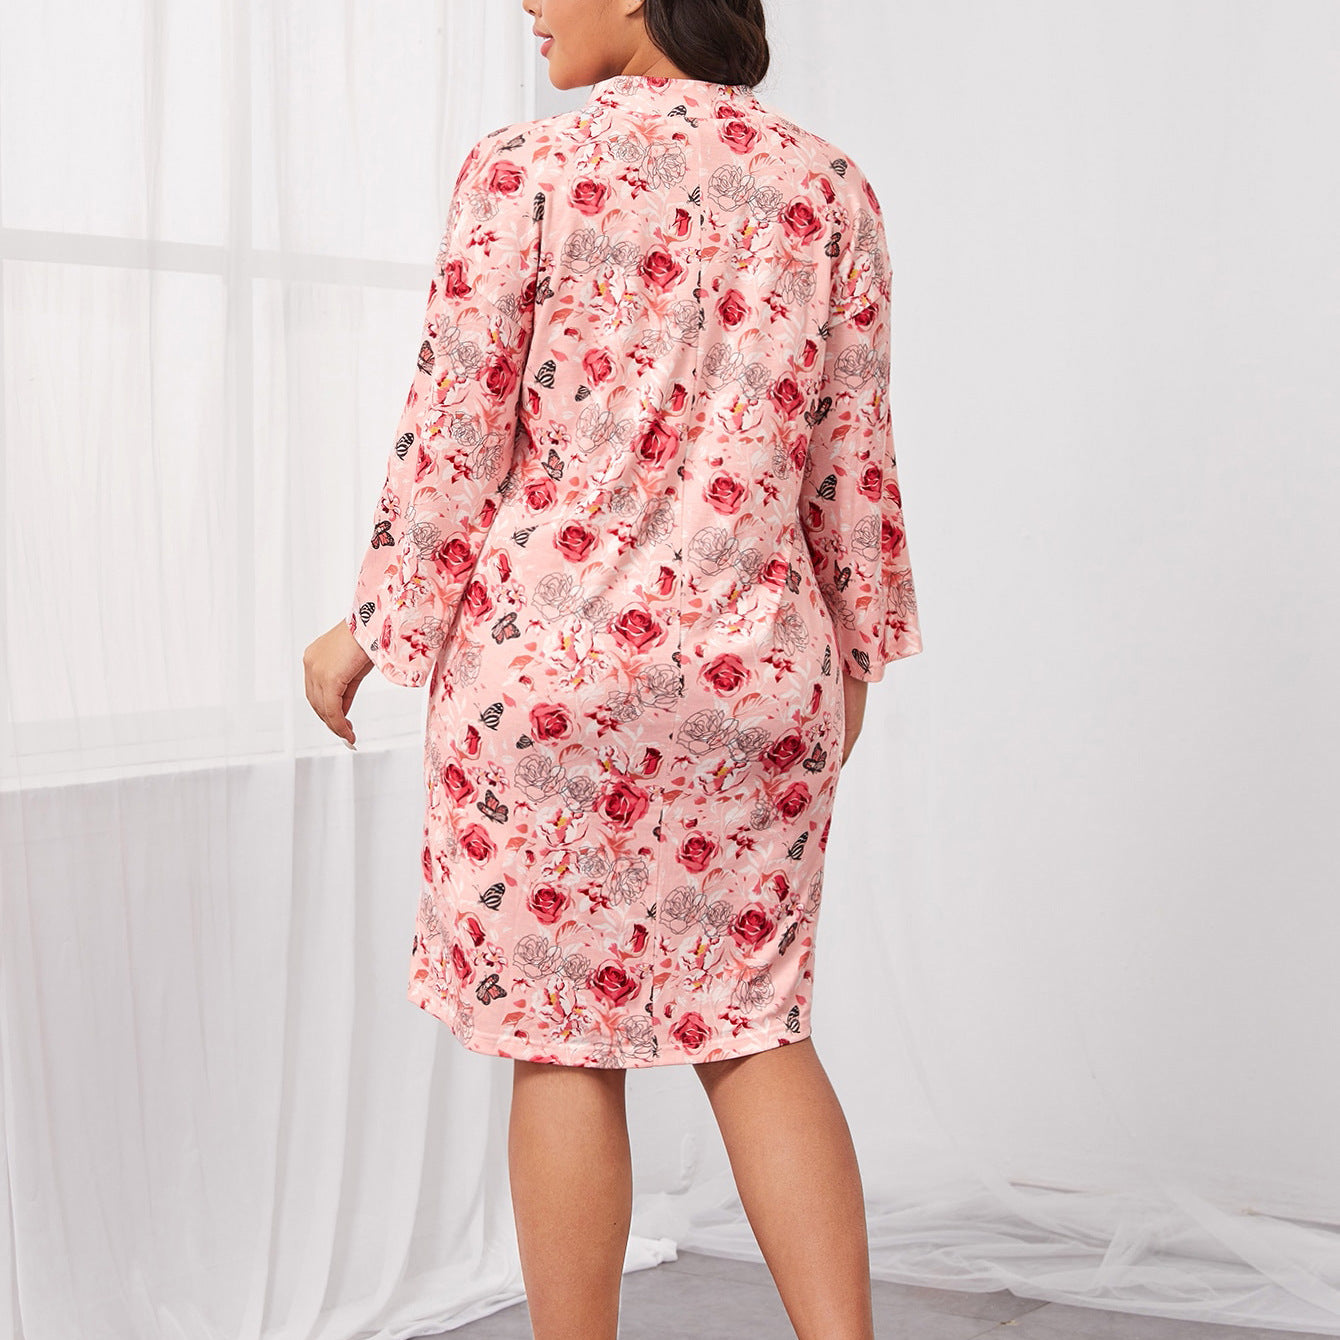 Plus Size Autumn Winter Dress Long Sleeve Imitation Cotton Digital Printing Home Wear Nightdress